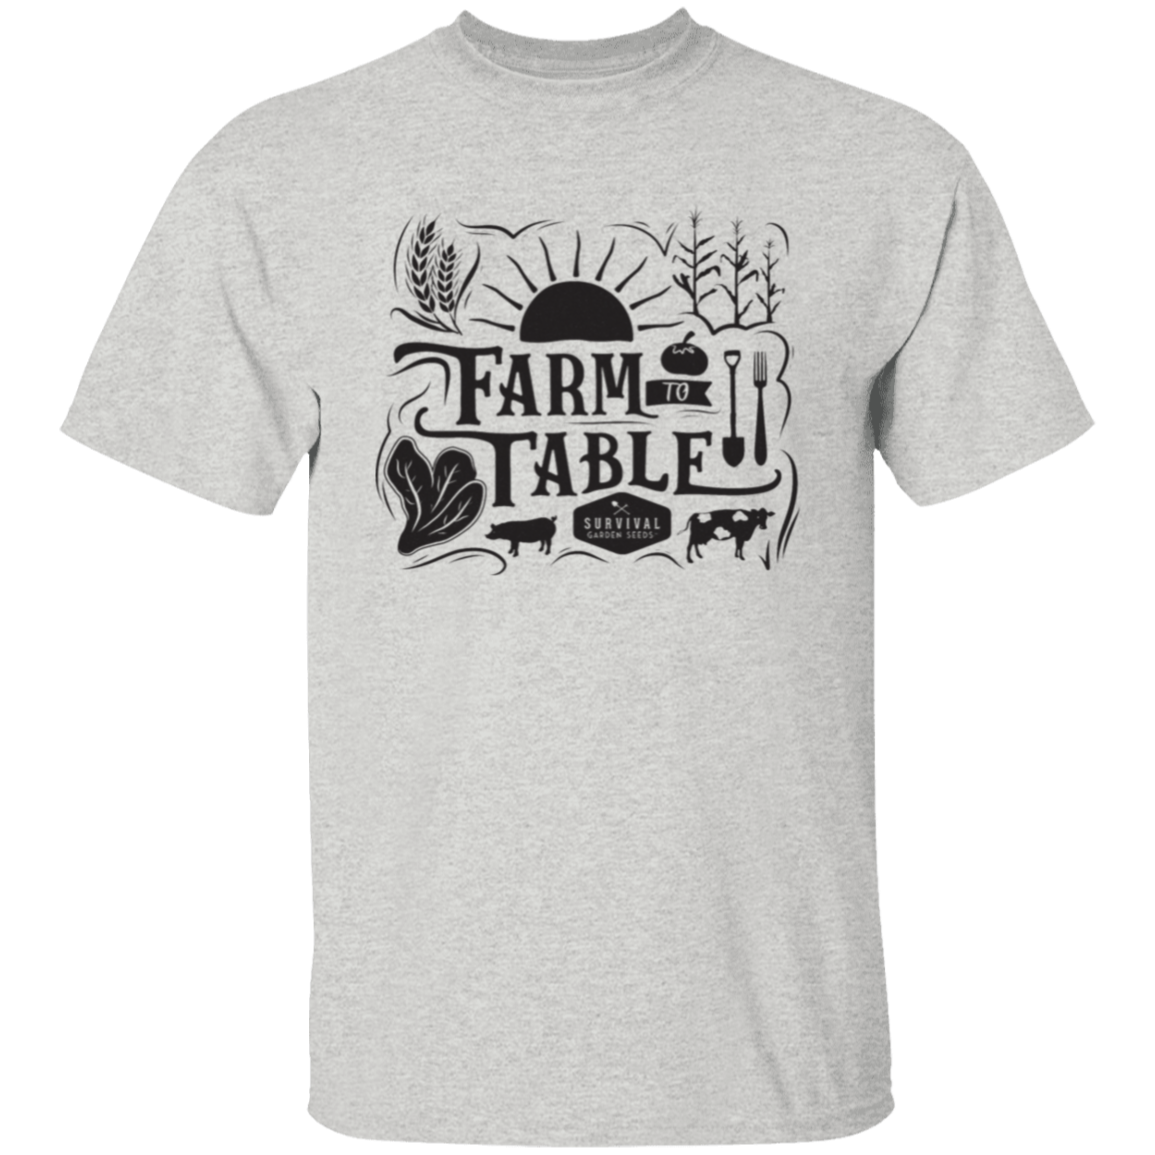 Unisex Short-Sleeve T-shirt - Farm to Table (black)